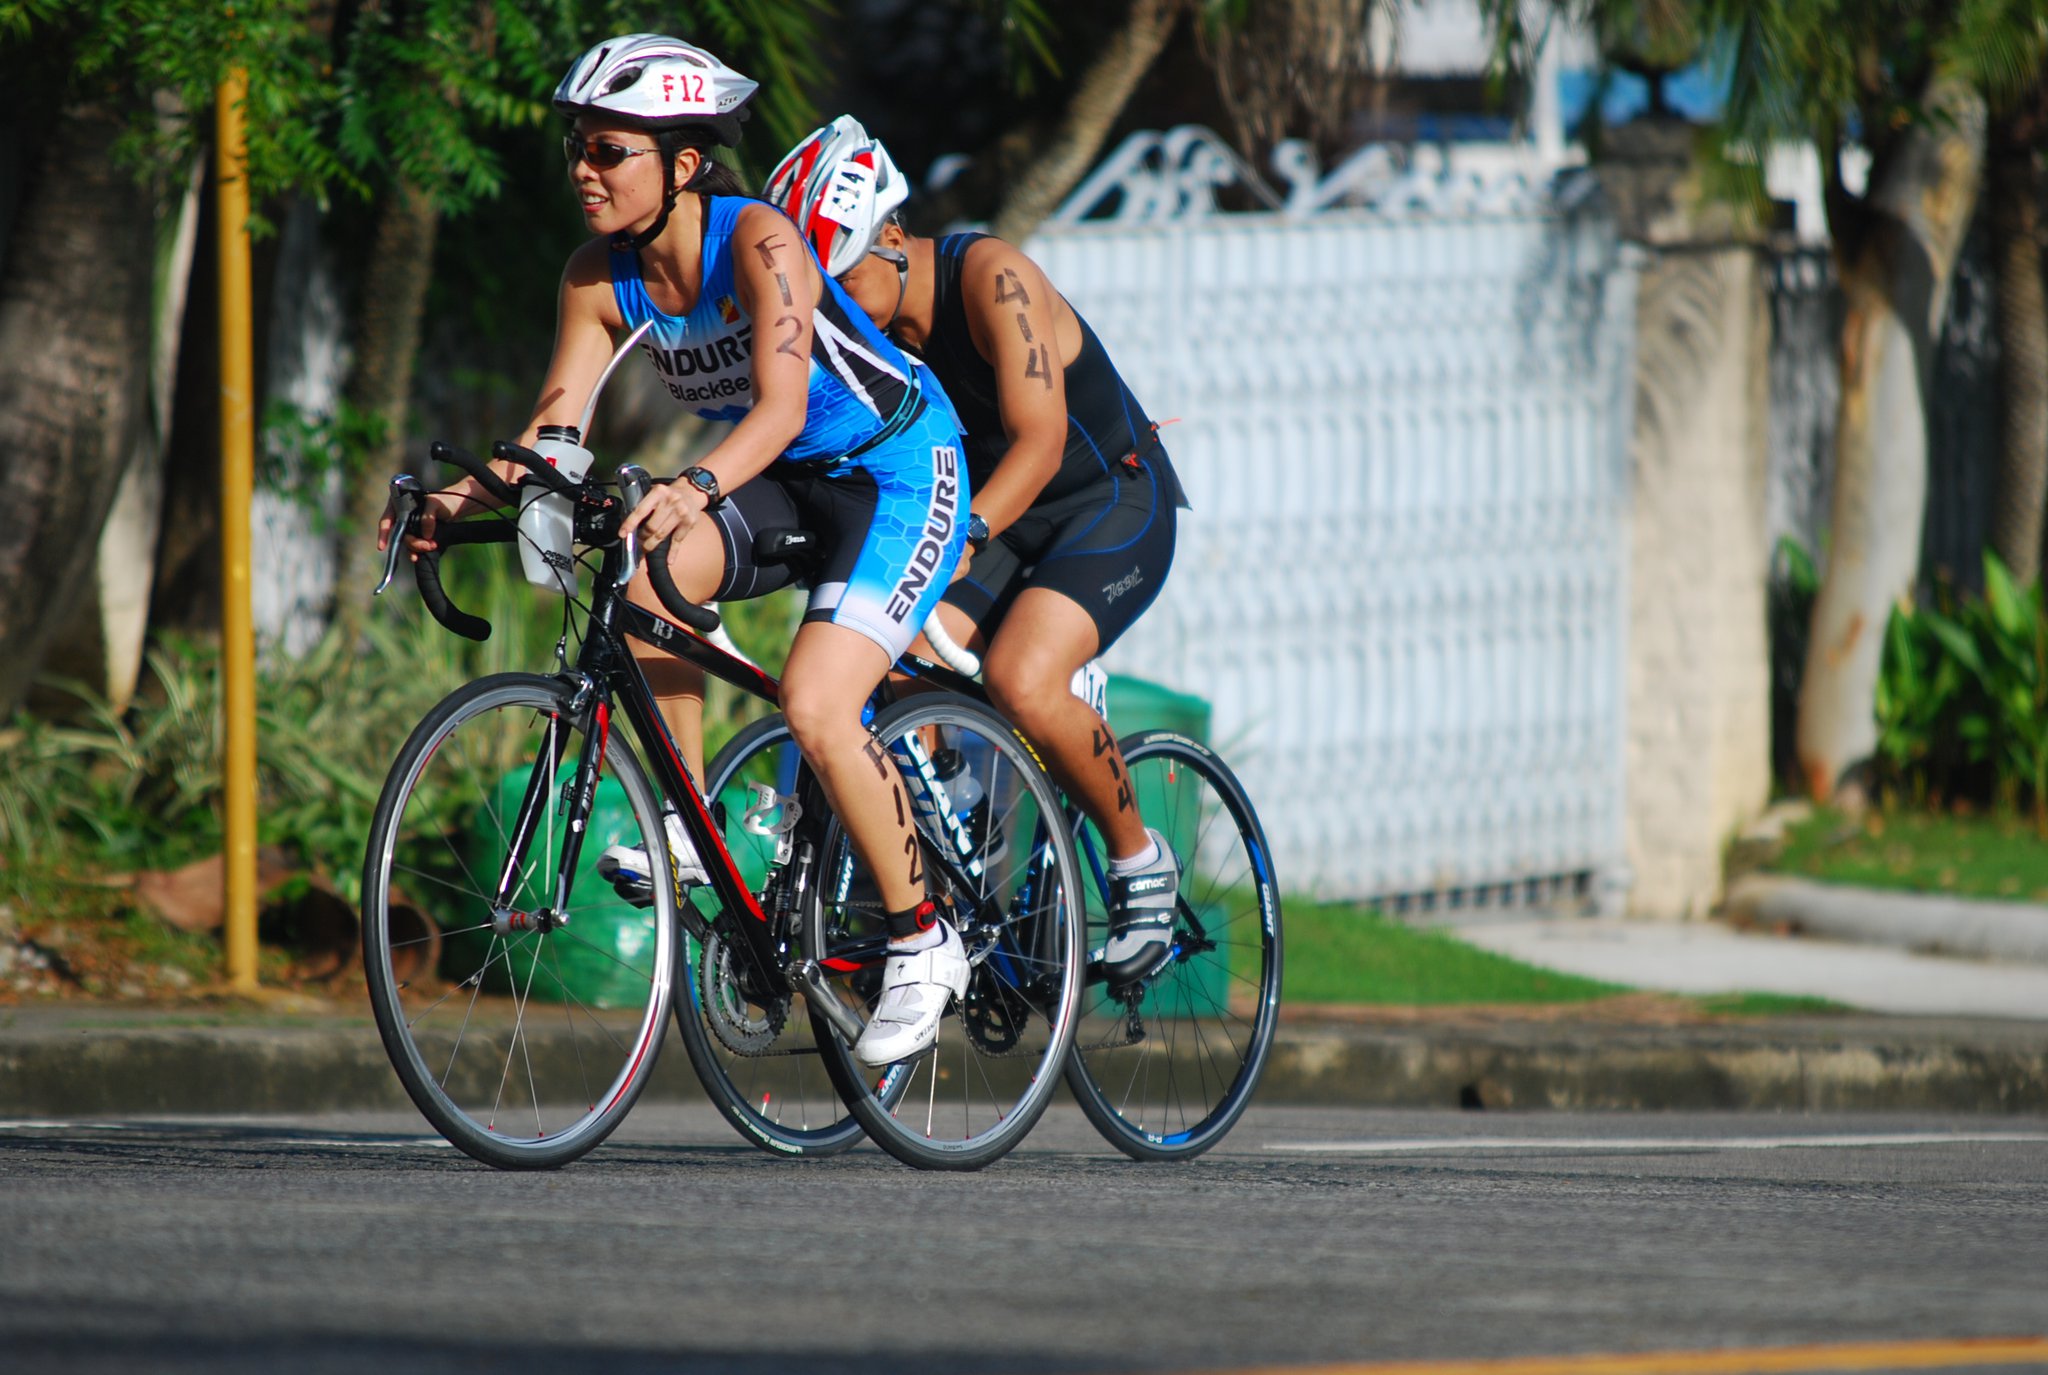 Animo Sprint Triathlon 2011: Bike Leg